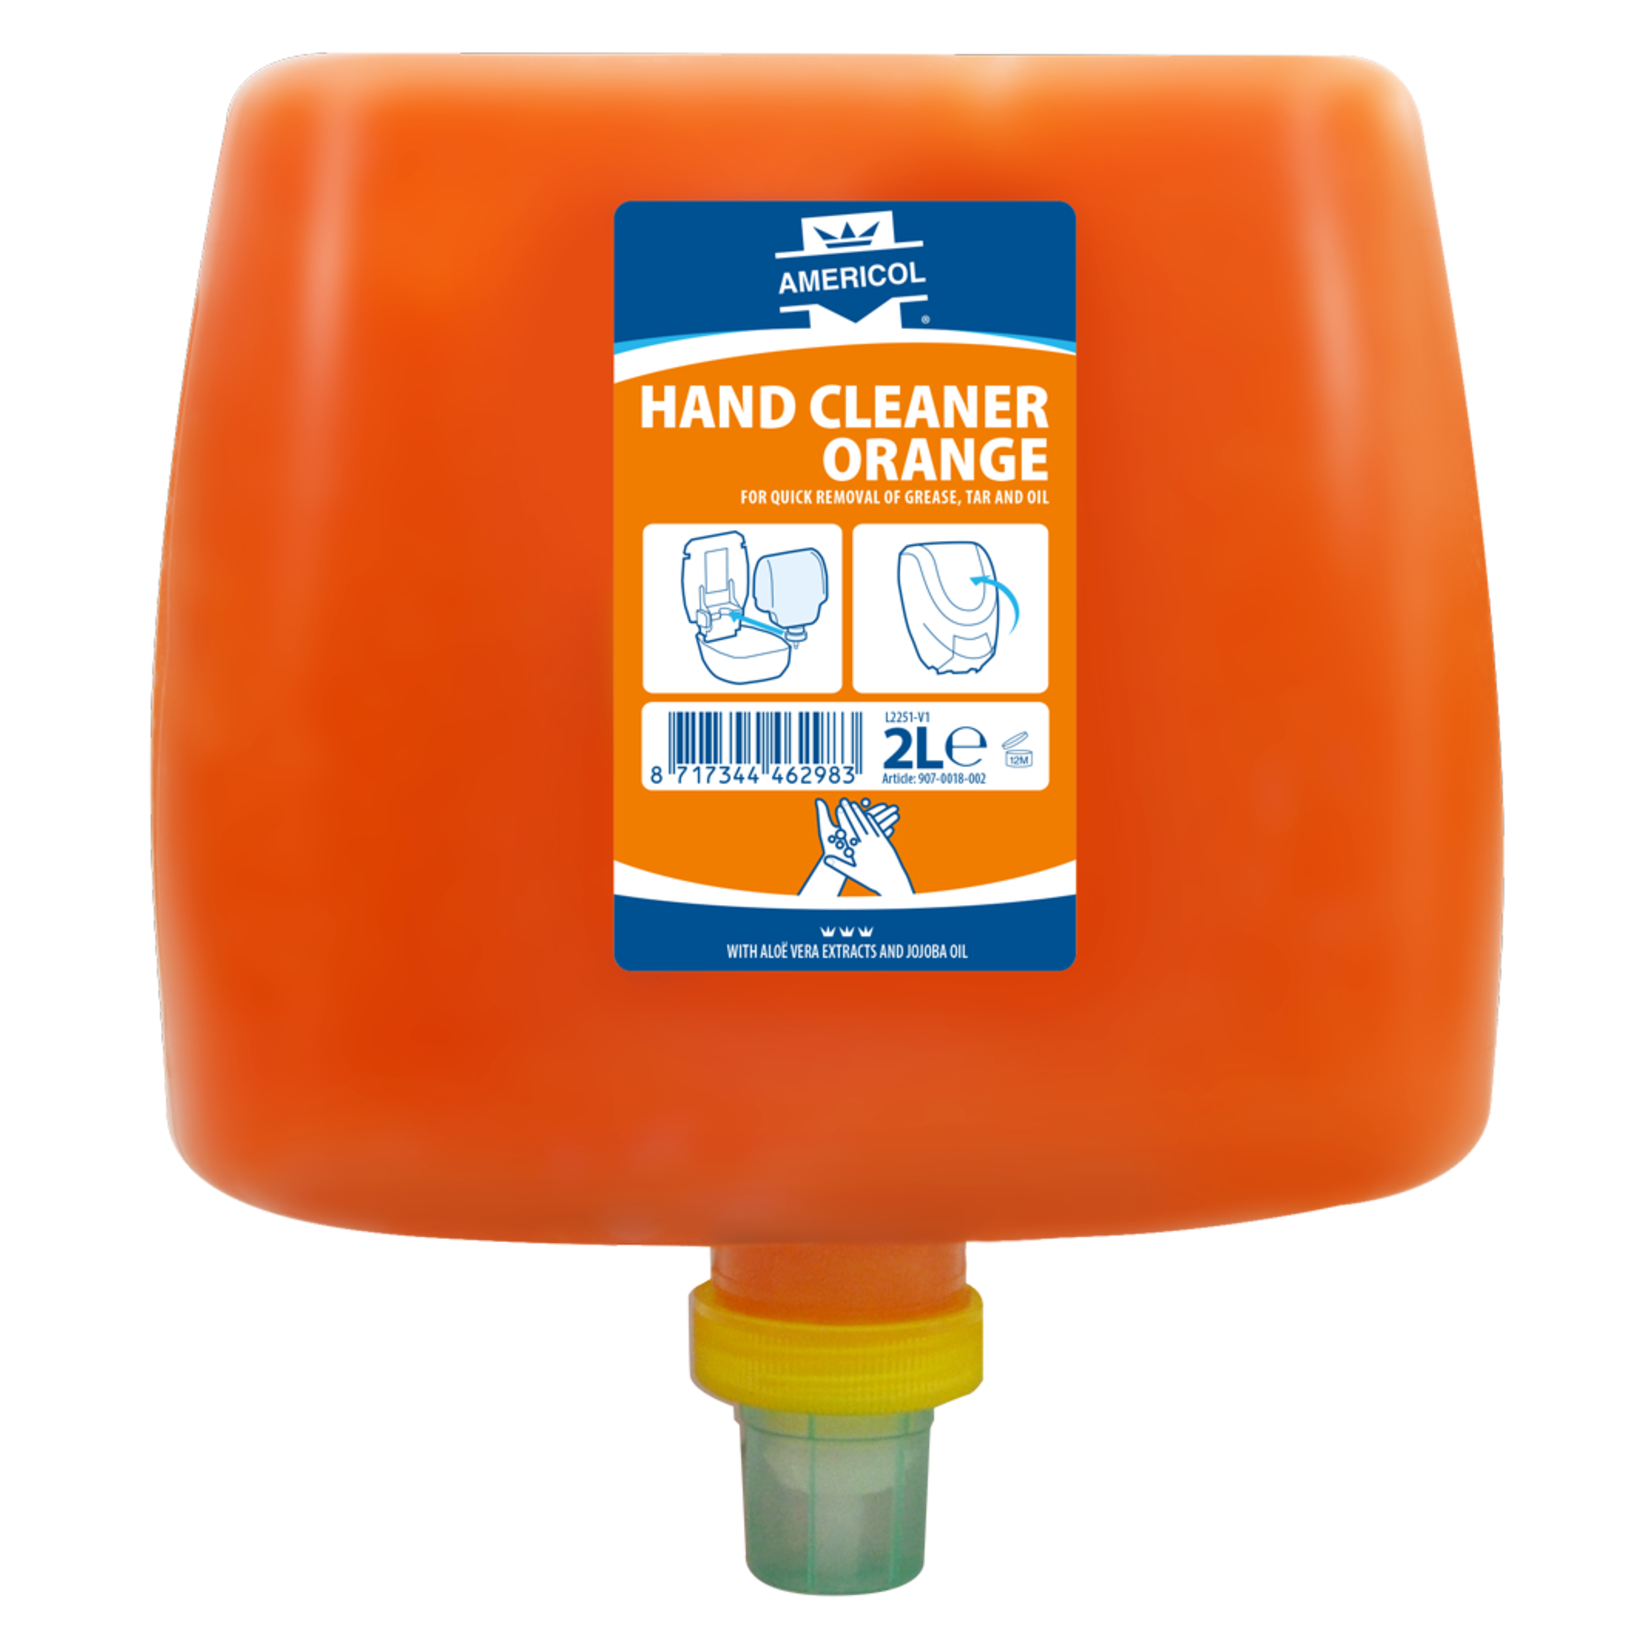 Americol Hand Cleaner Orange Cartridge (2 Liter)